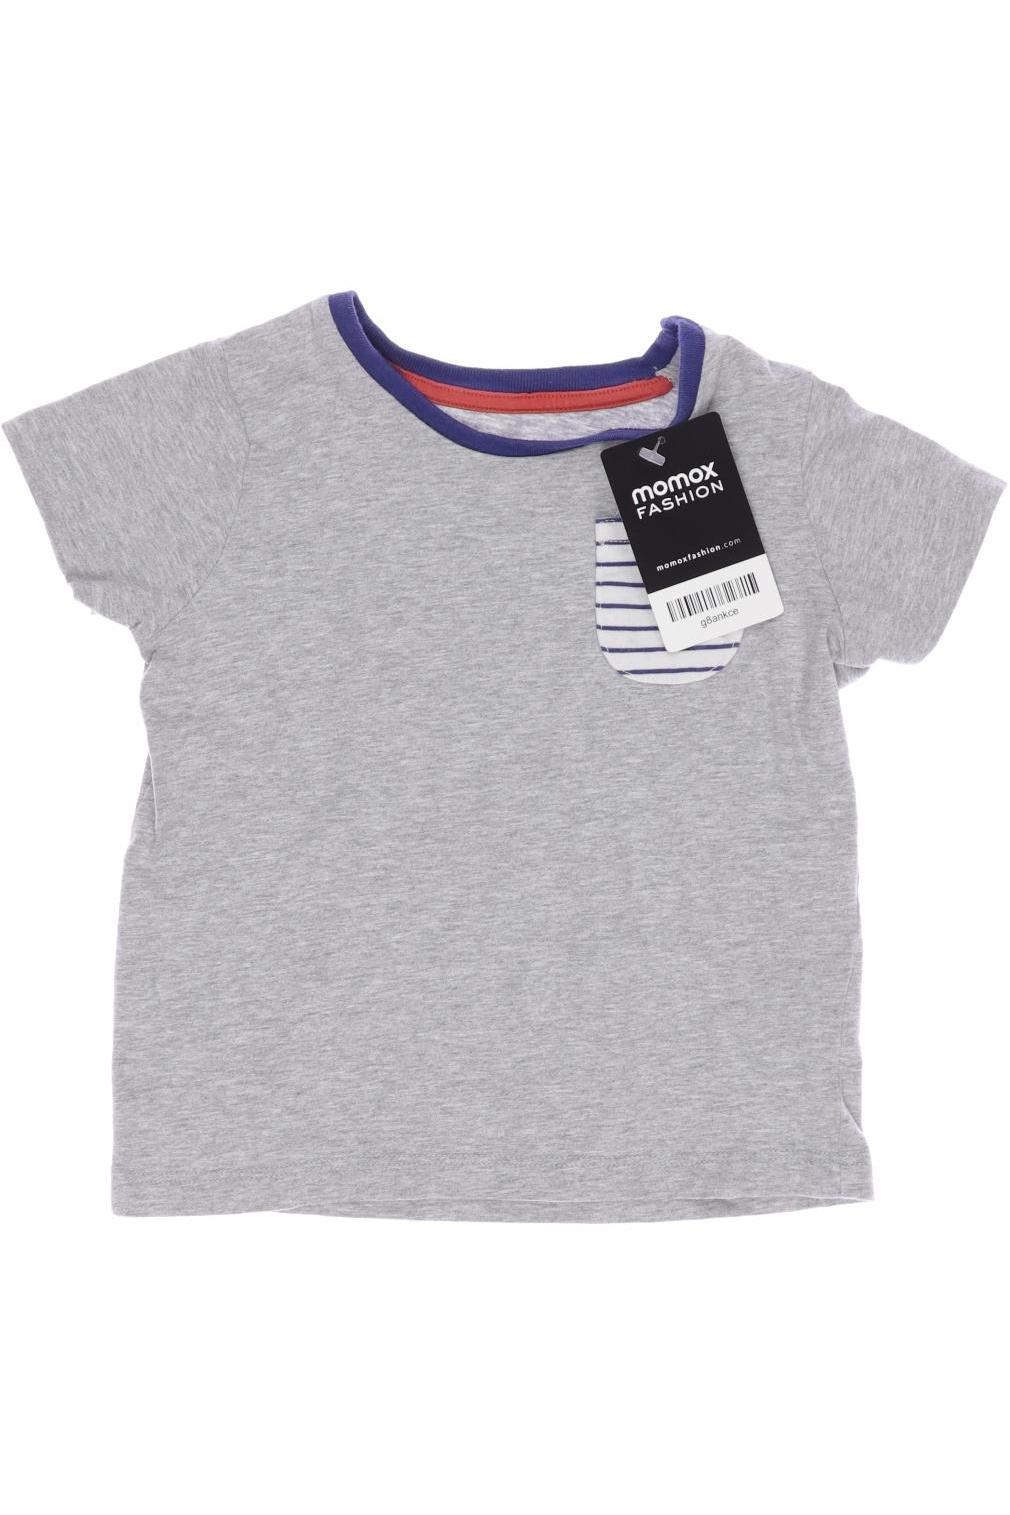 Mini Boden Jungen T-Shirt, grau von Mini Boden